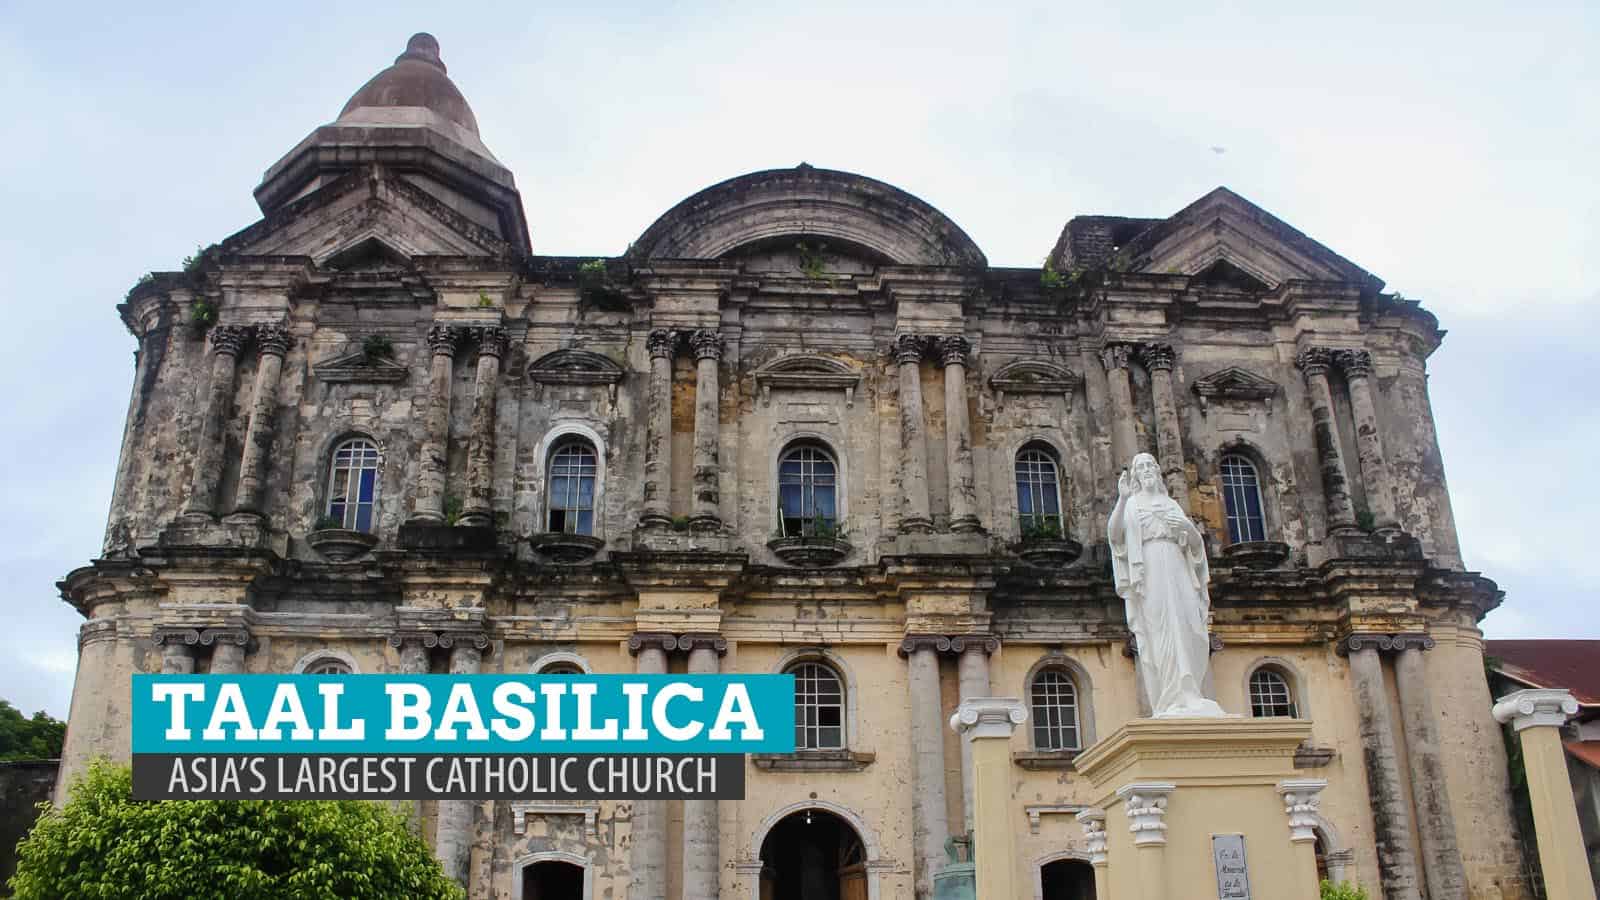 Basilica de San Martin de Tours, or simply Taal Basilica, is Asia's largest Catholic church.